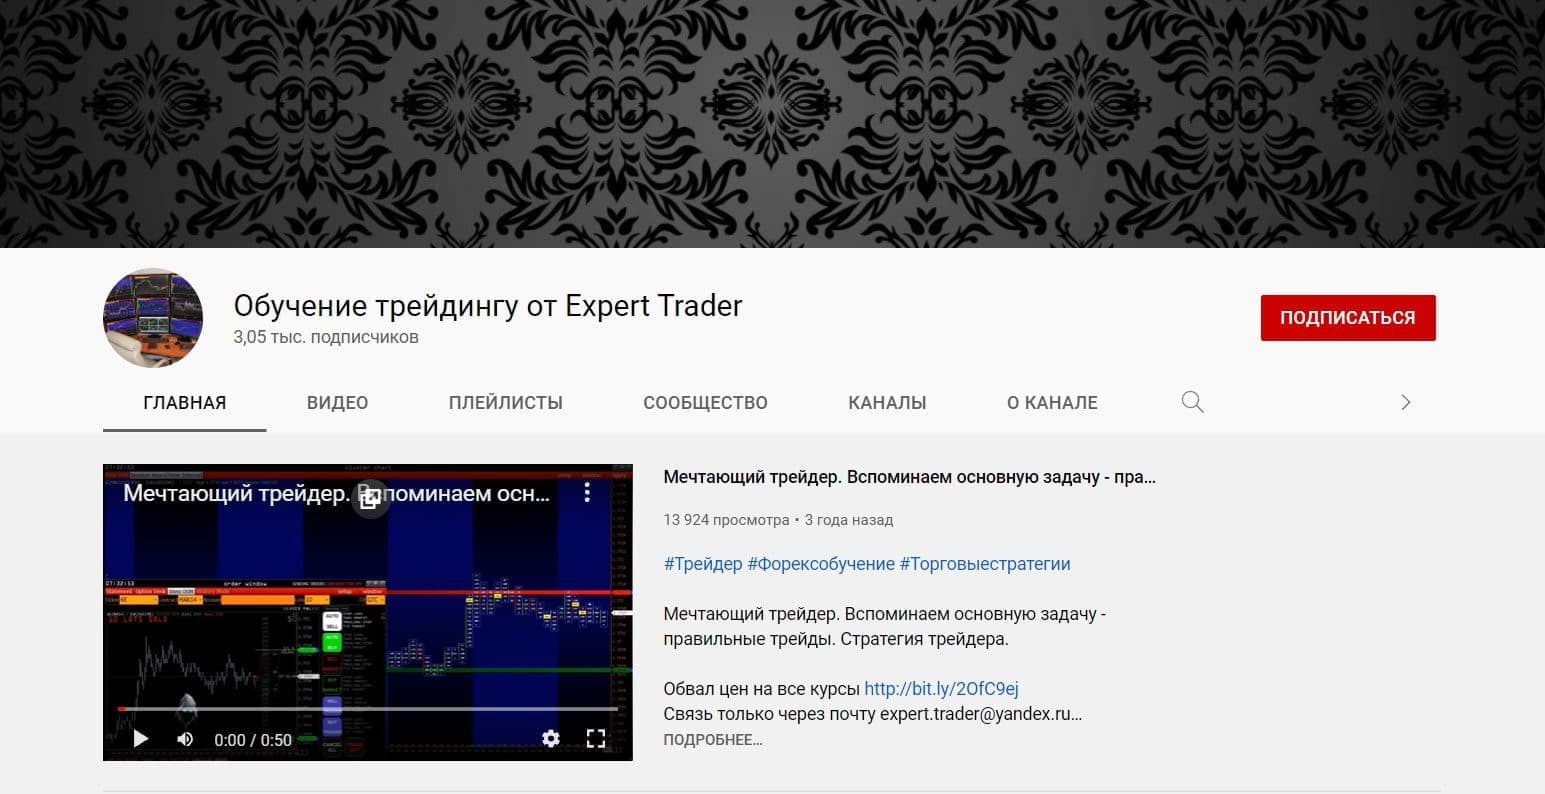 Ютуб канал Expert Trader